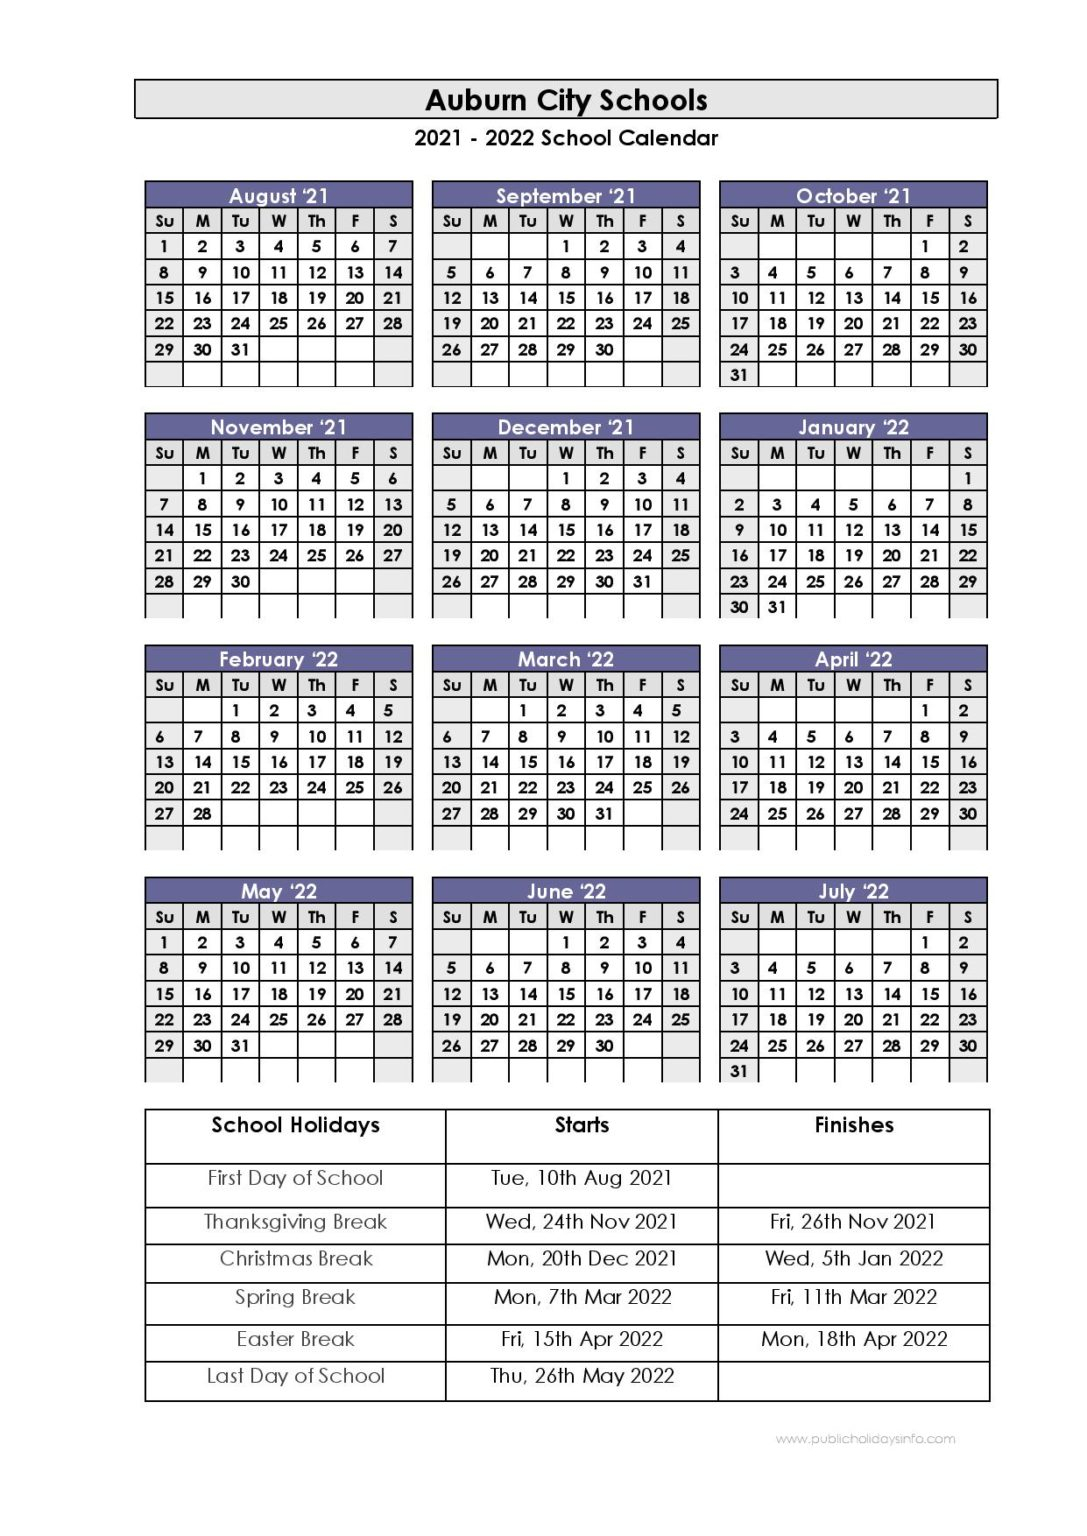 Auburn City Schools Calendar 2021-2022 In Pdf Format